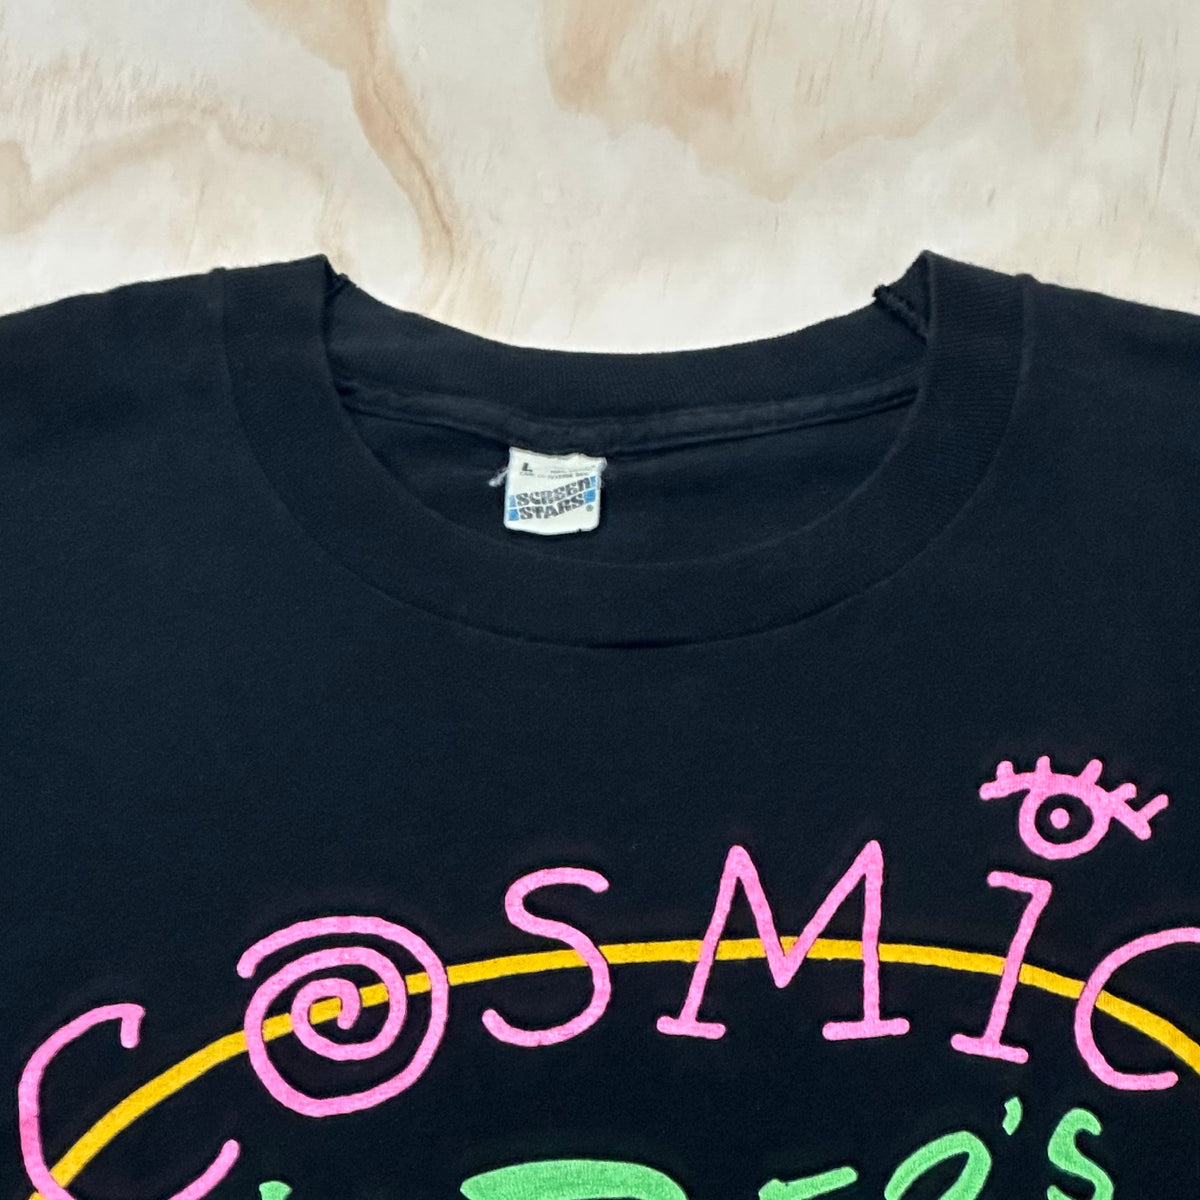 1989 Vintage The B-52's Cosmic Thing Tour Shirt